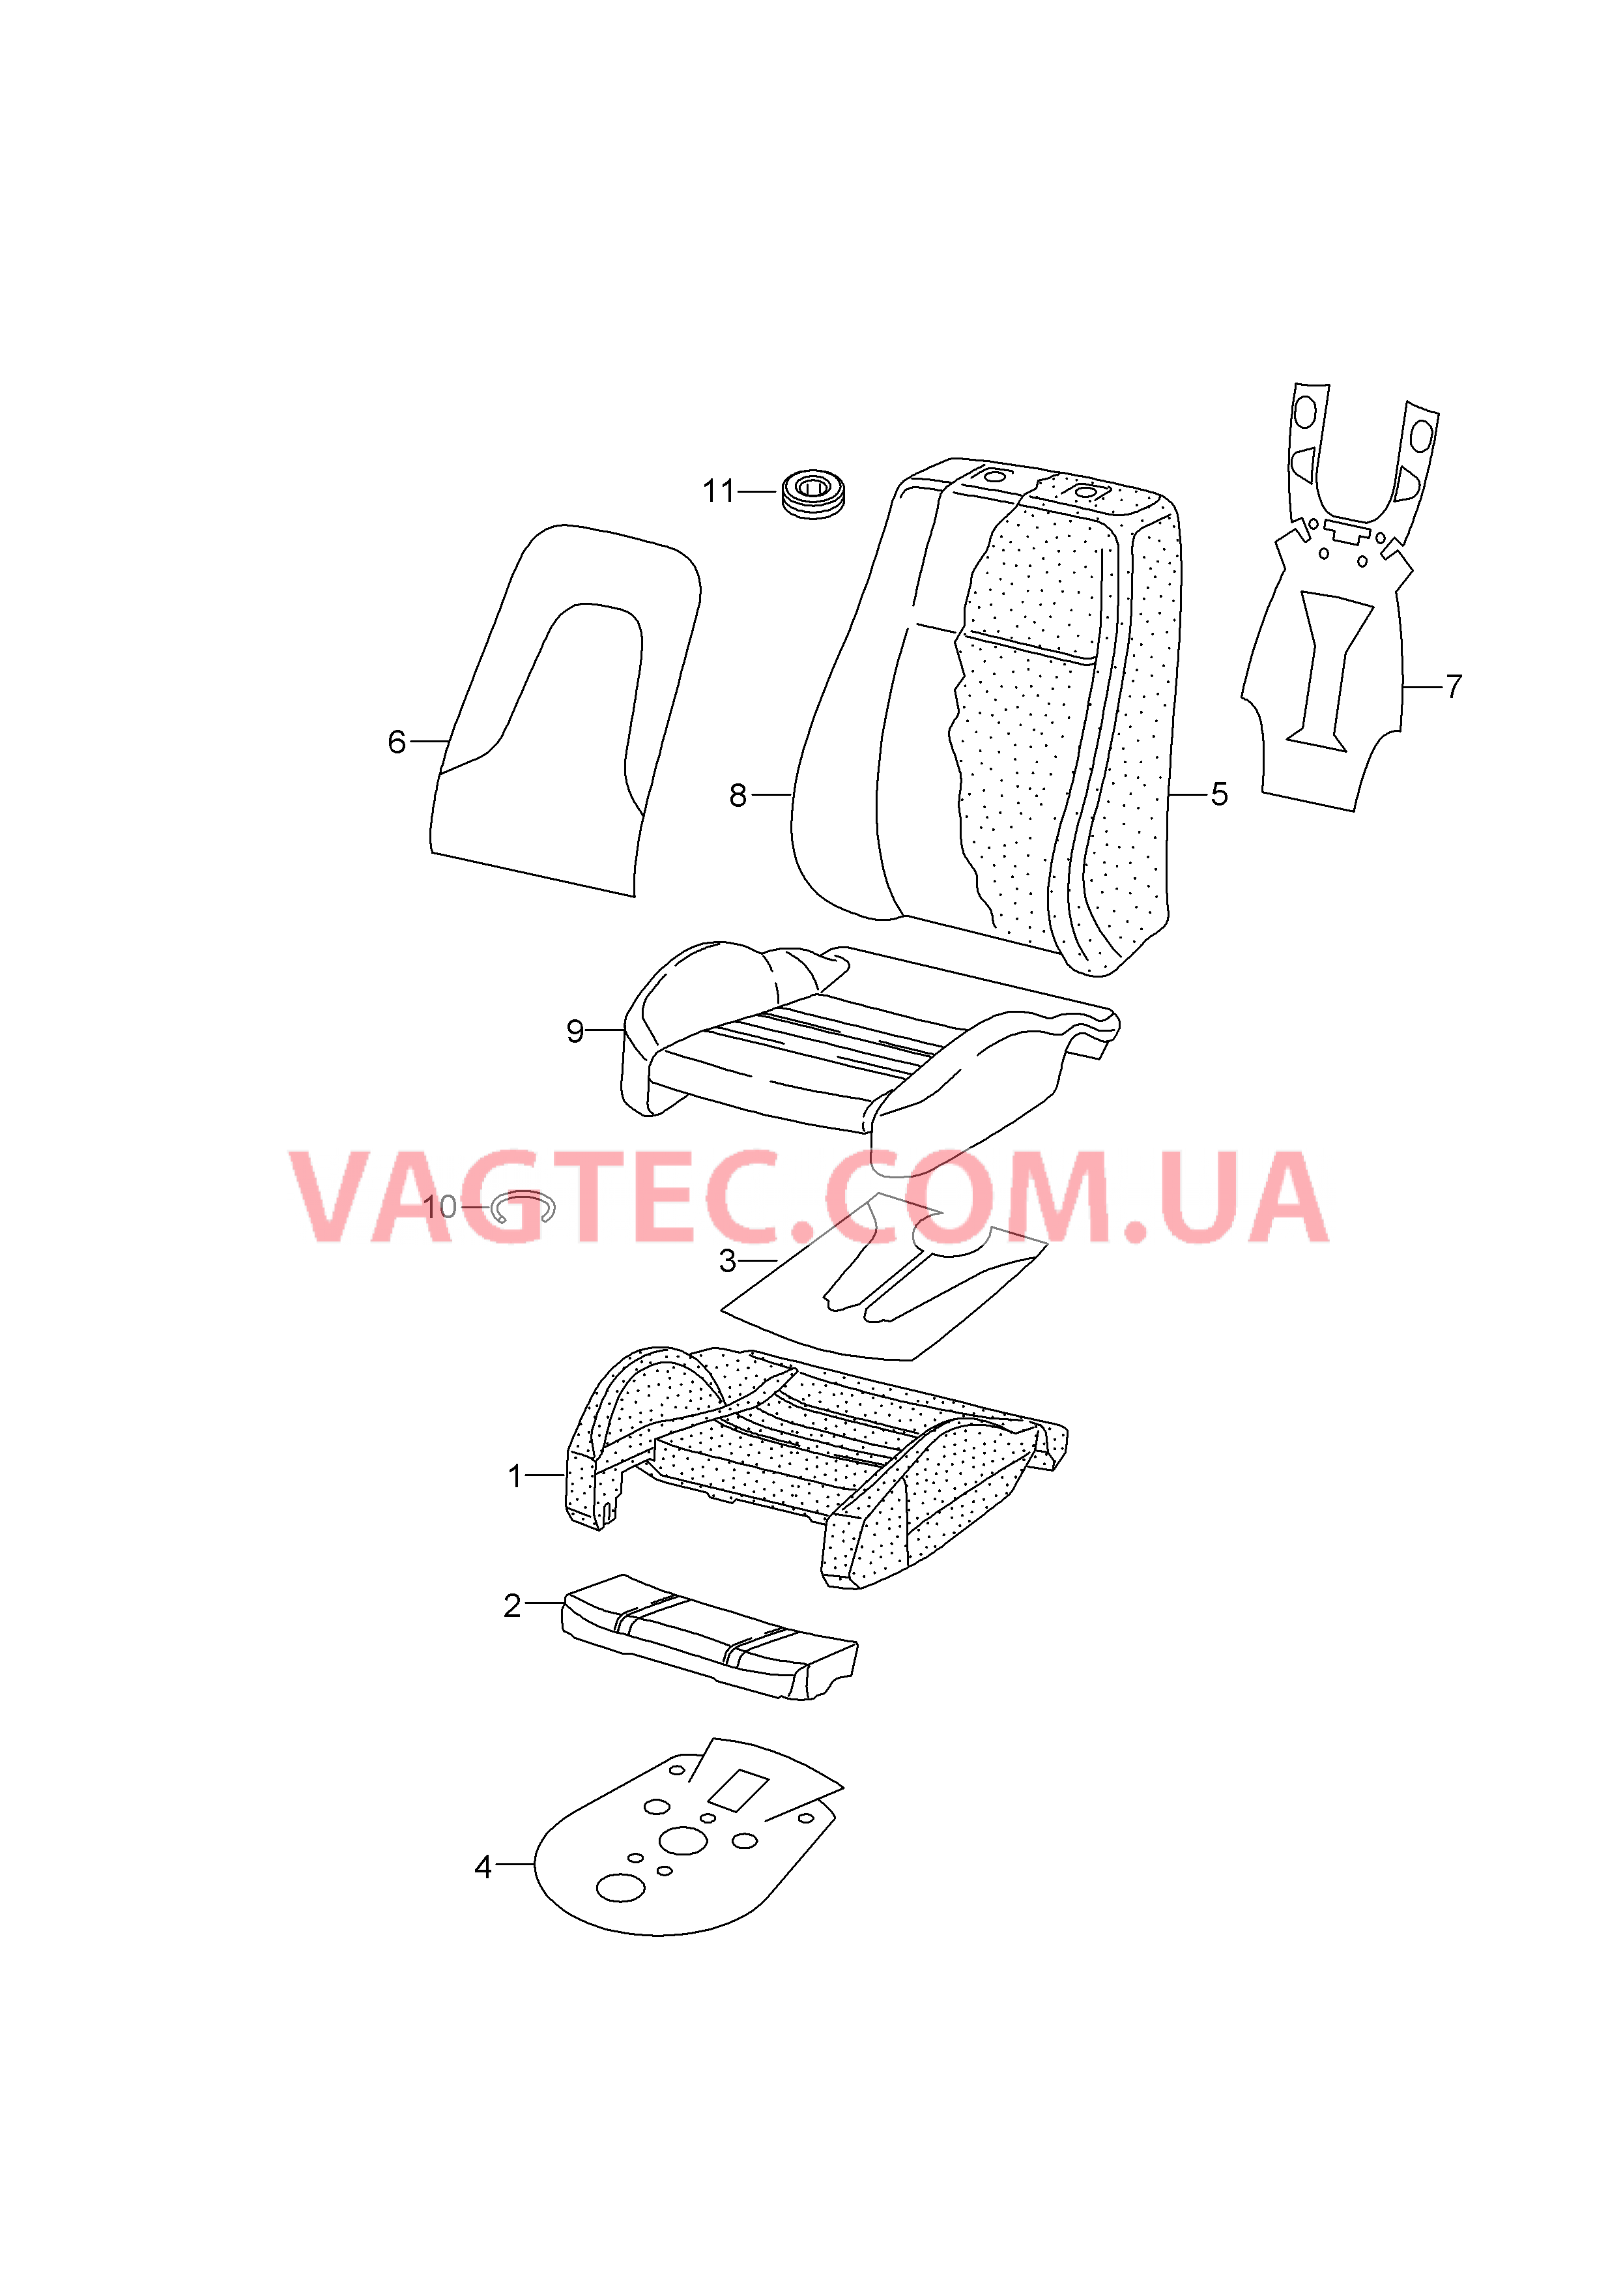 Подушка сиденья Набивка спинки Обивка подушки и спинки сиден.  для AUDI A5 2016